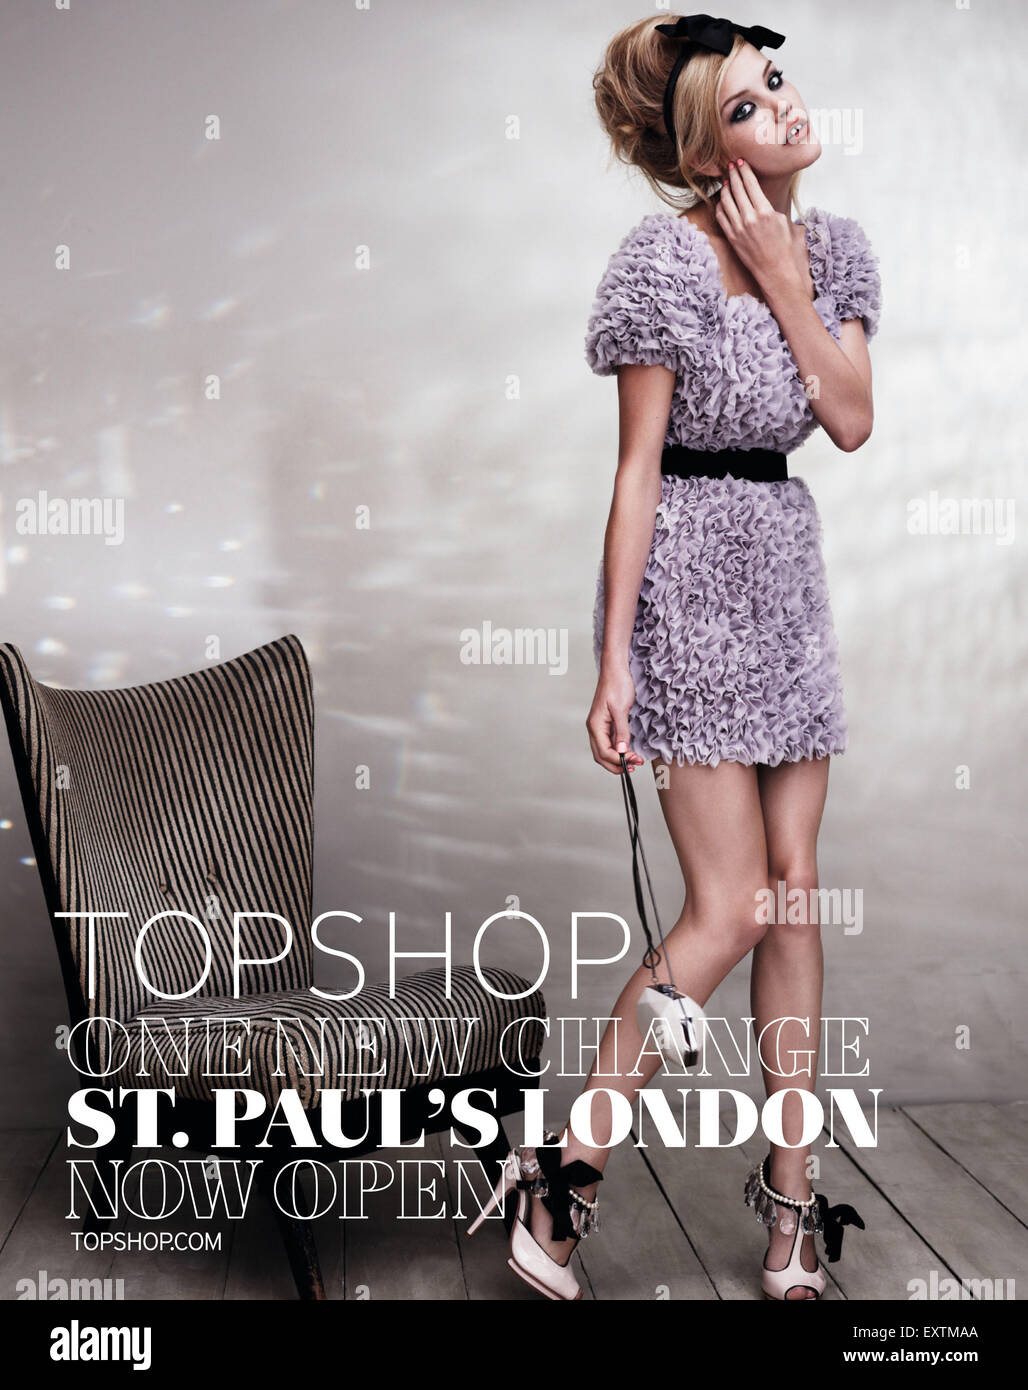 2010s UK Topshop Magazine Advert Stock Photo - Alamy